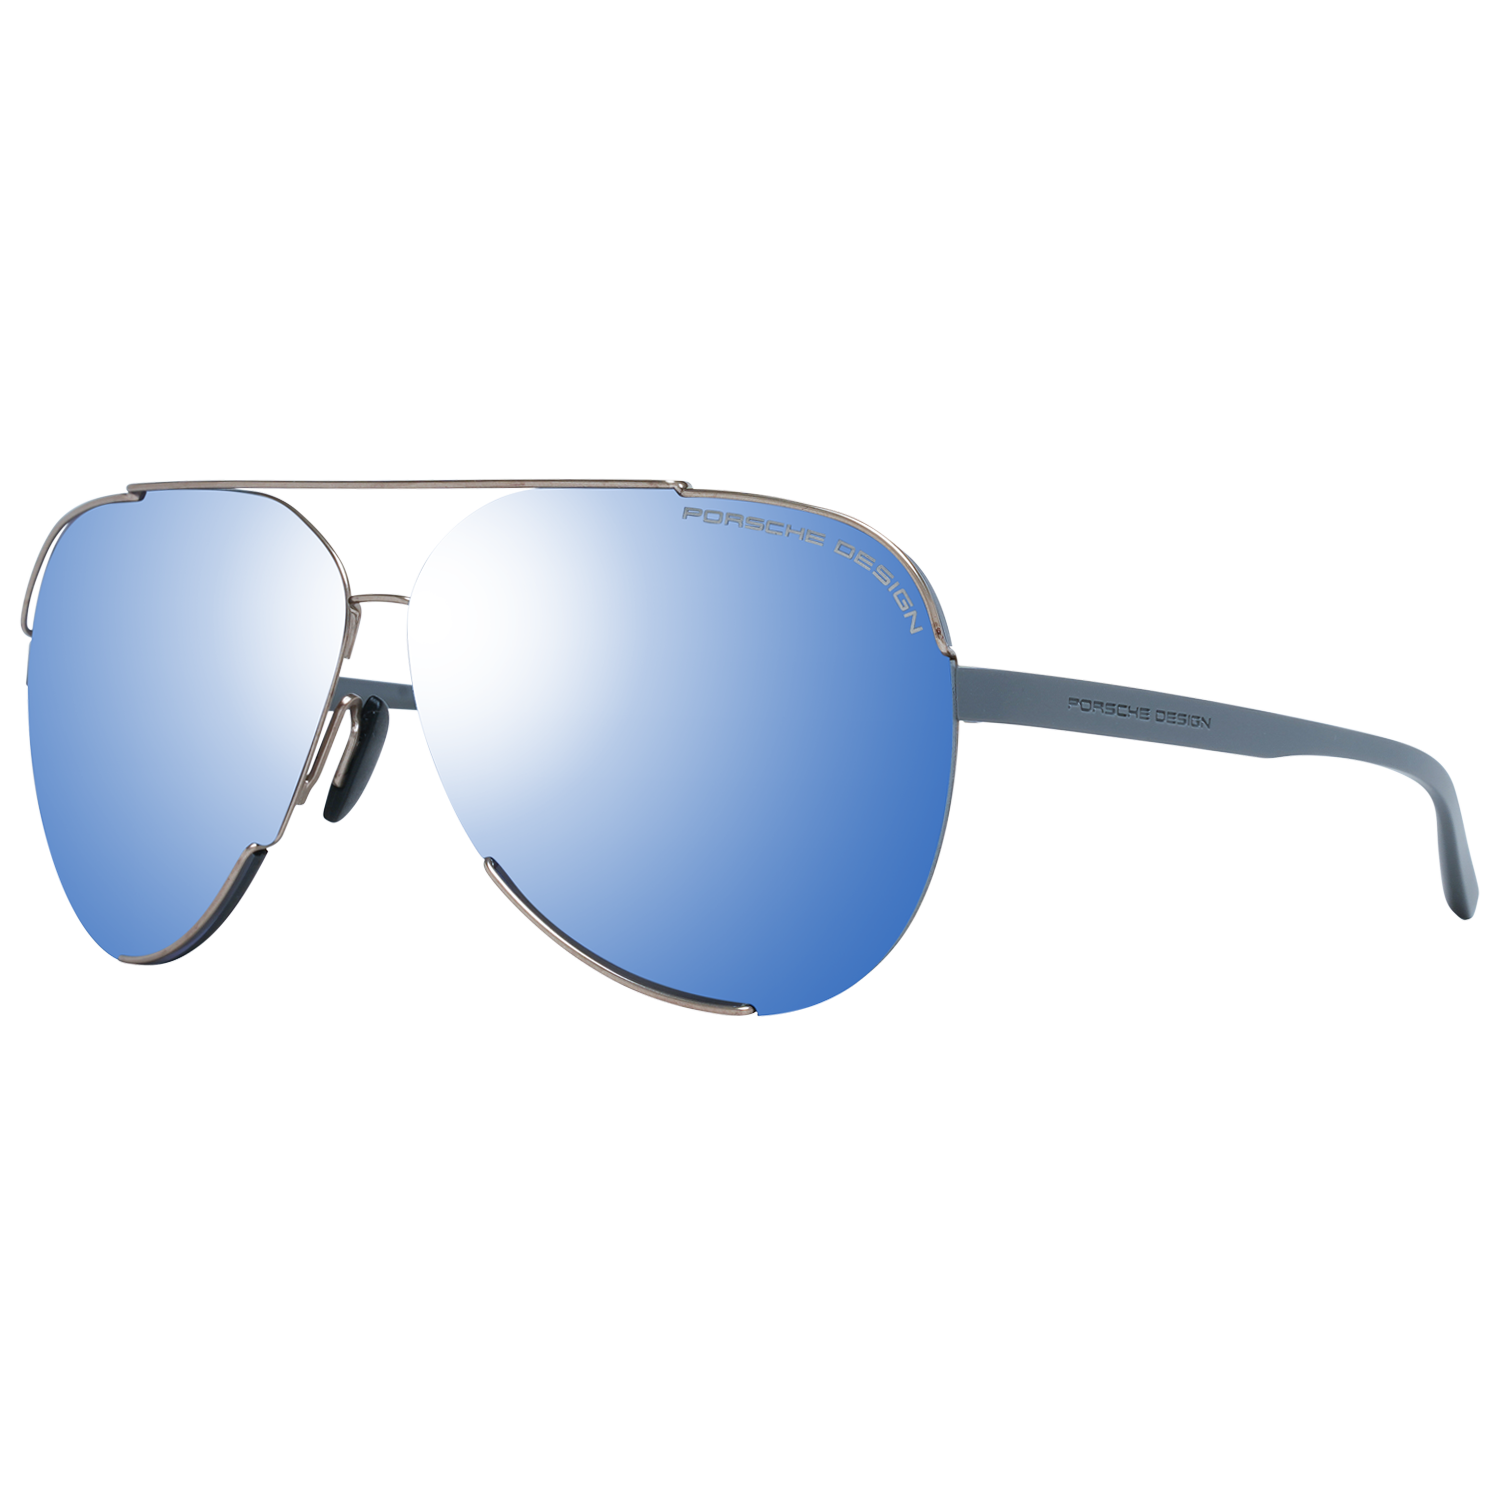 Porsche Design Sunglasses Men's Mirrored Aviator P8682 D 64